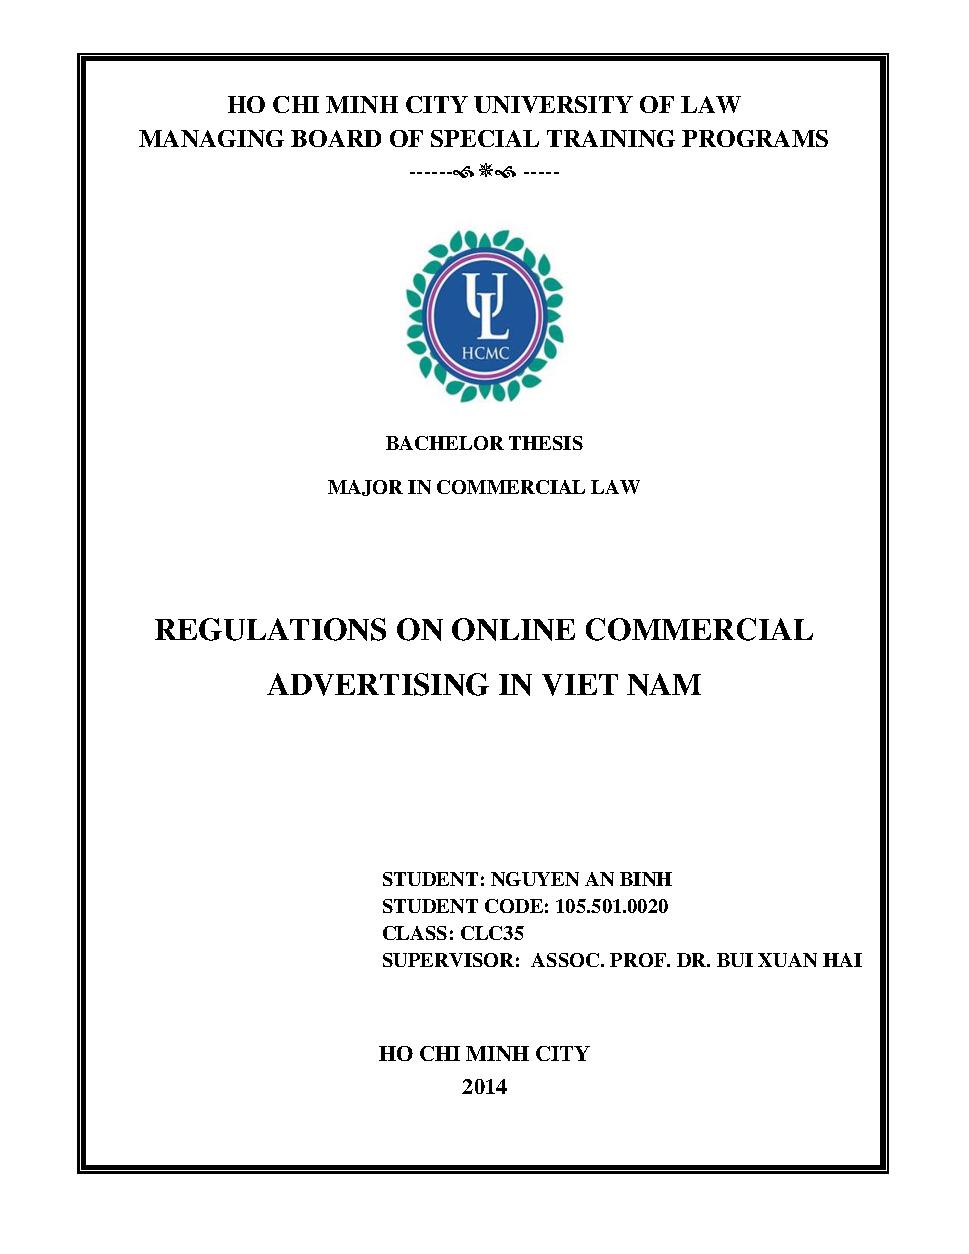 Regulations on online commercial advertising in Viet Nam